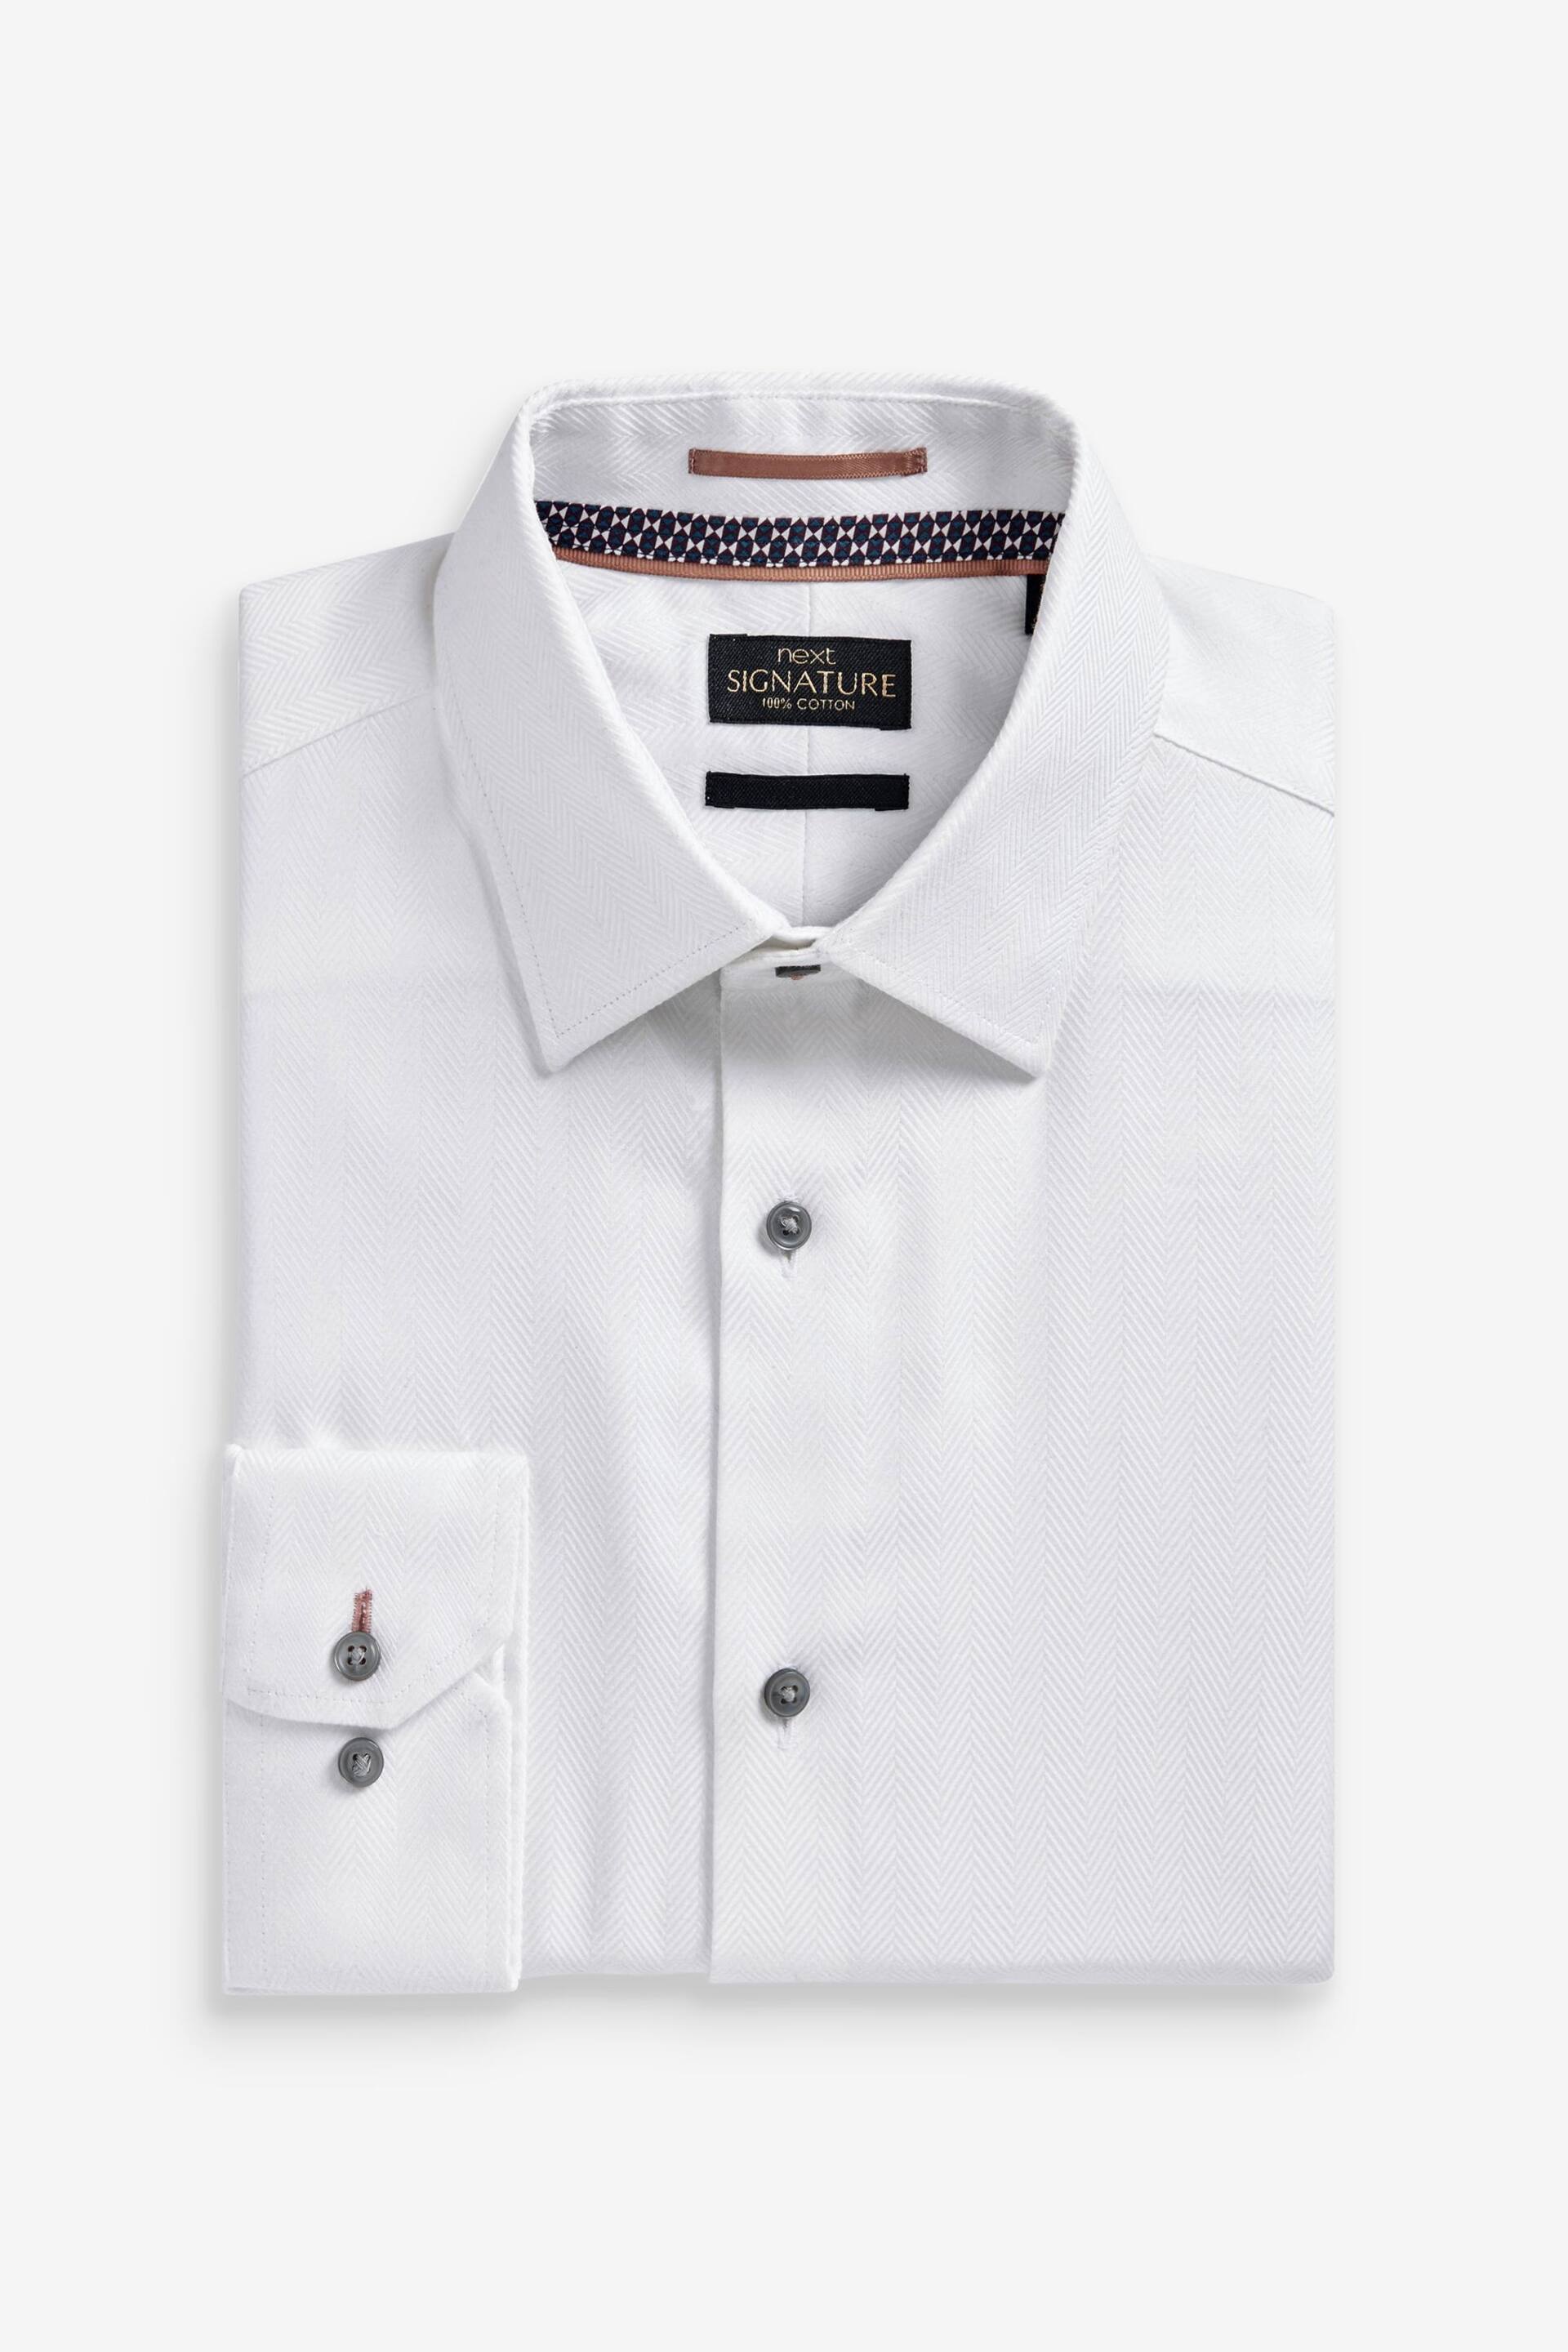 White Herringbone Signature Trimmed Single Cuff Shirt - Image 6 of 7